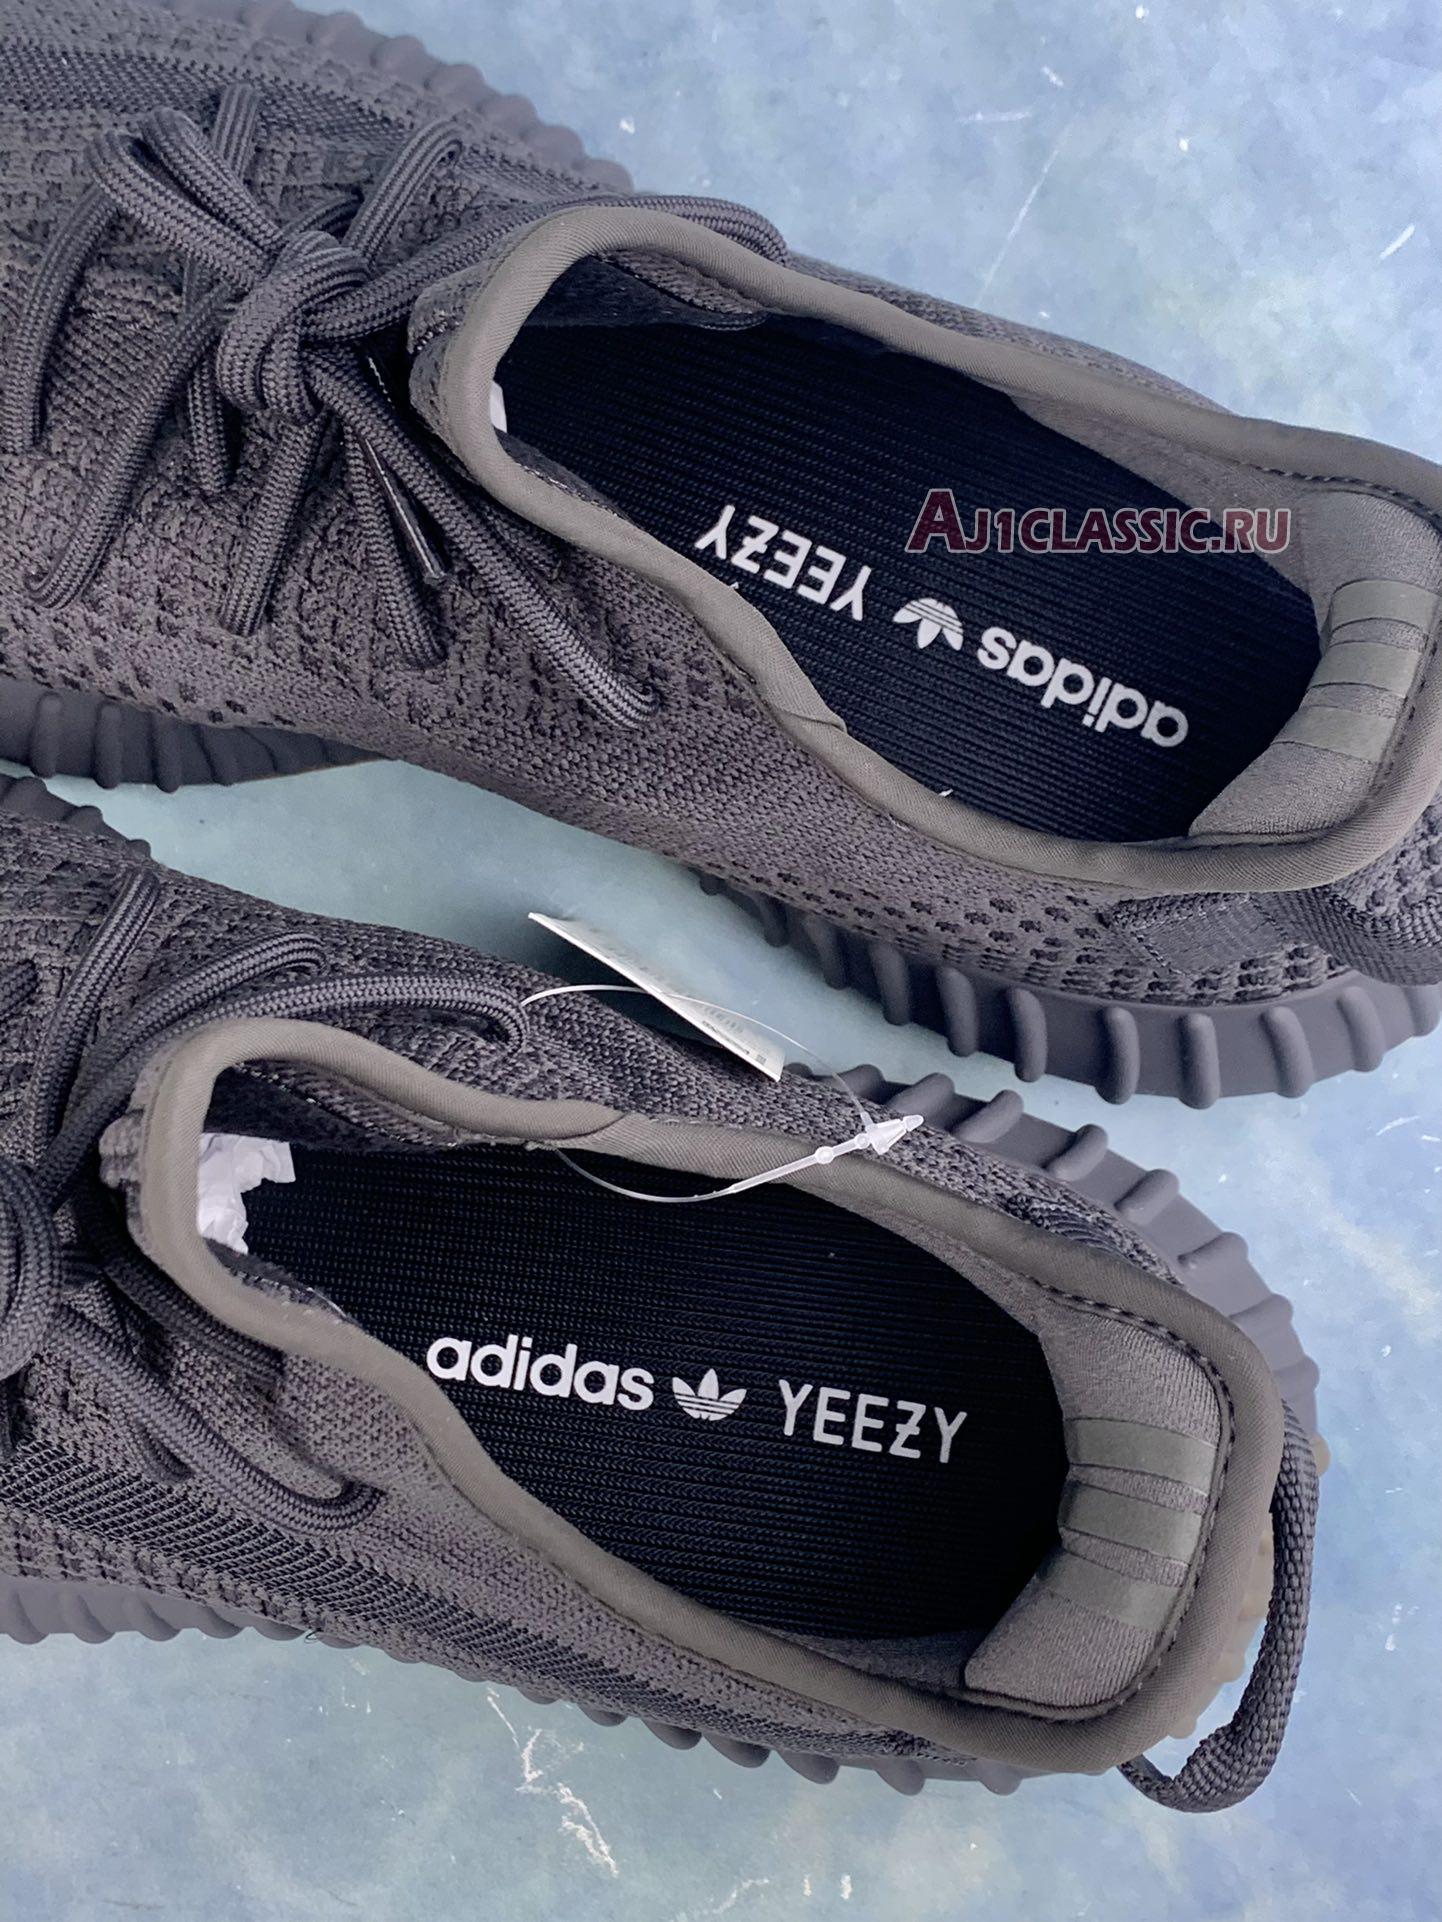 Adidas Yeezy Boost 350 V2 "Cinder Non-Reflective" FY2903-2